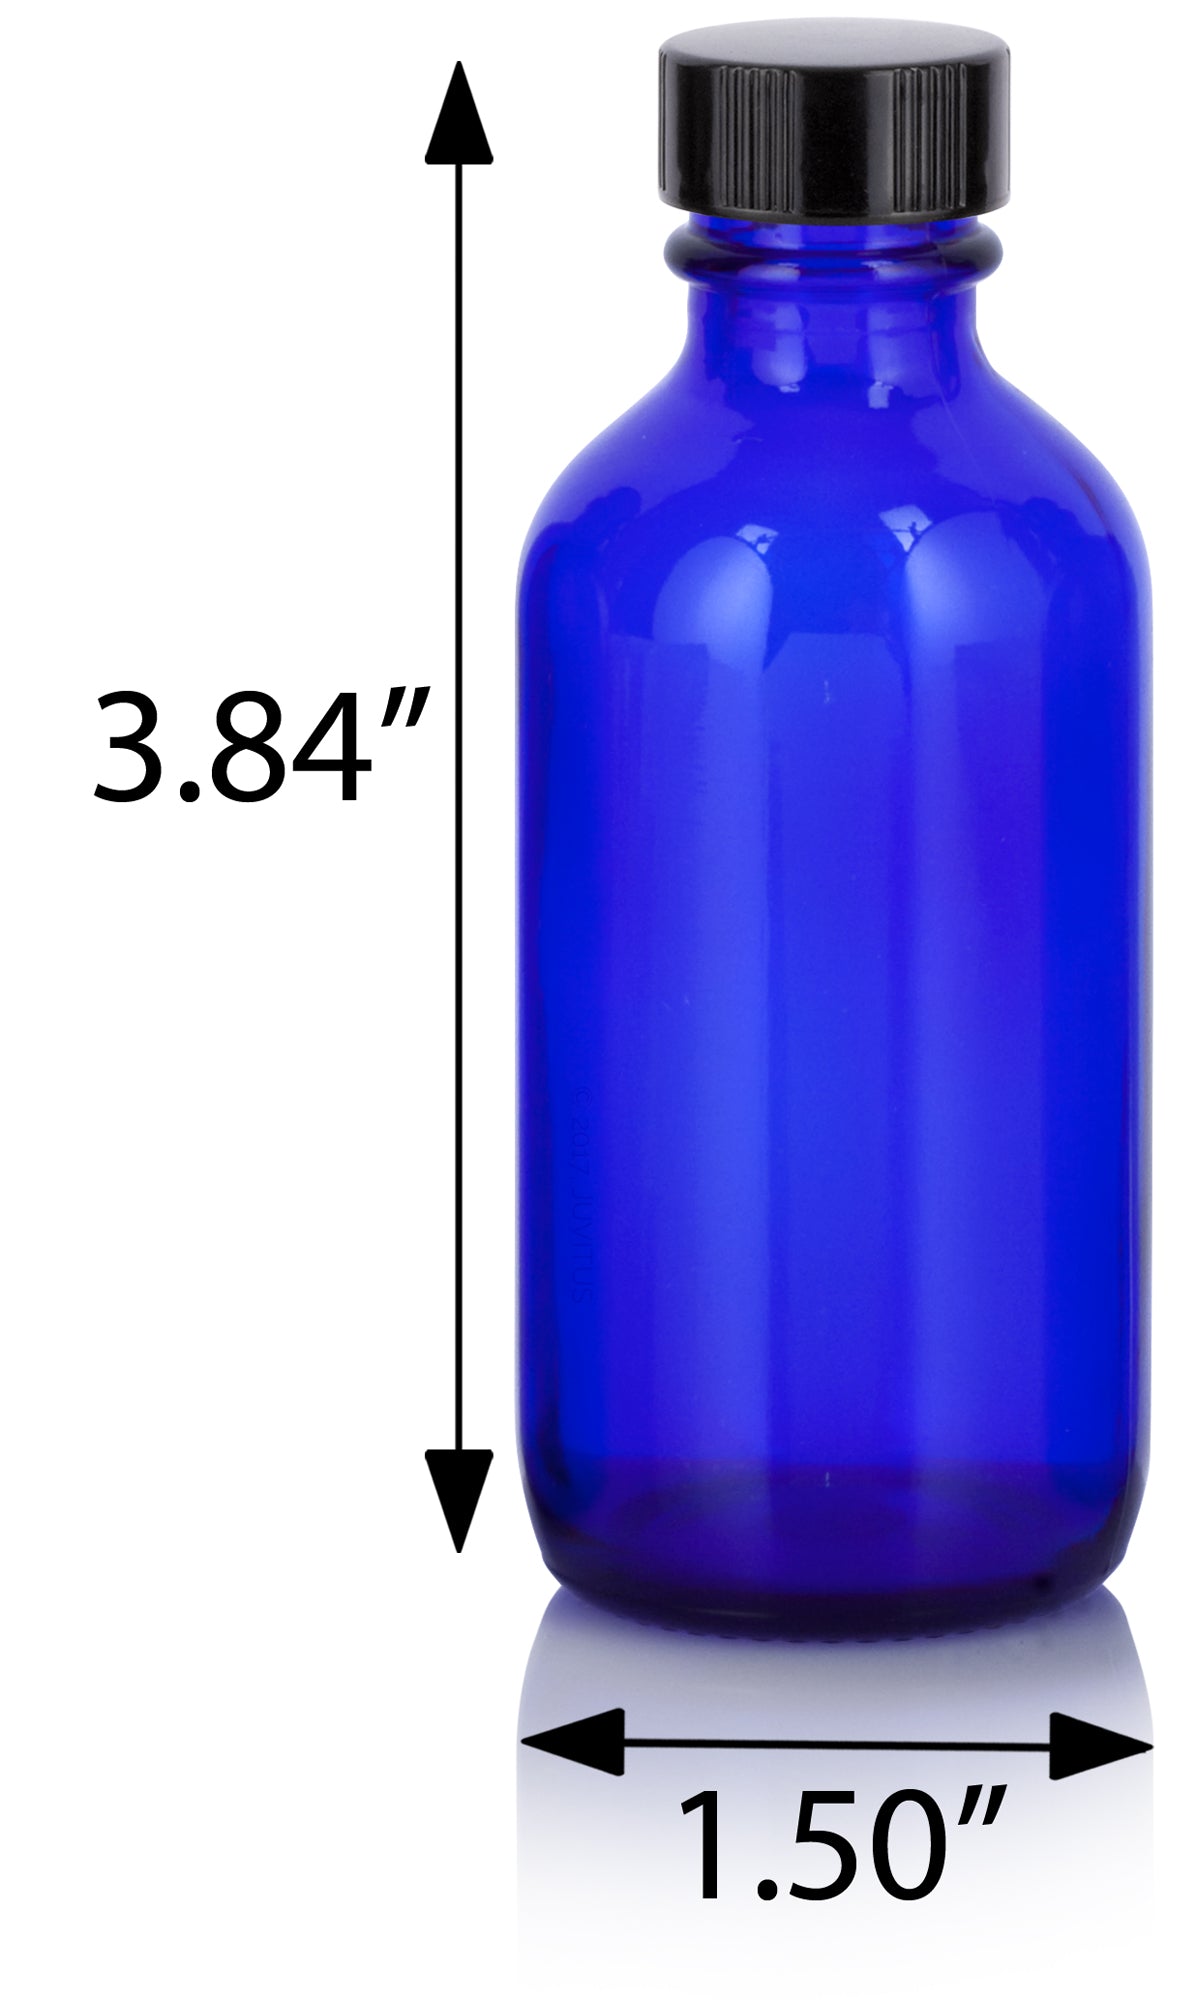 8 oz Cobalt Blue Boston Round Glass Bottle with Black Cap